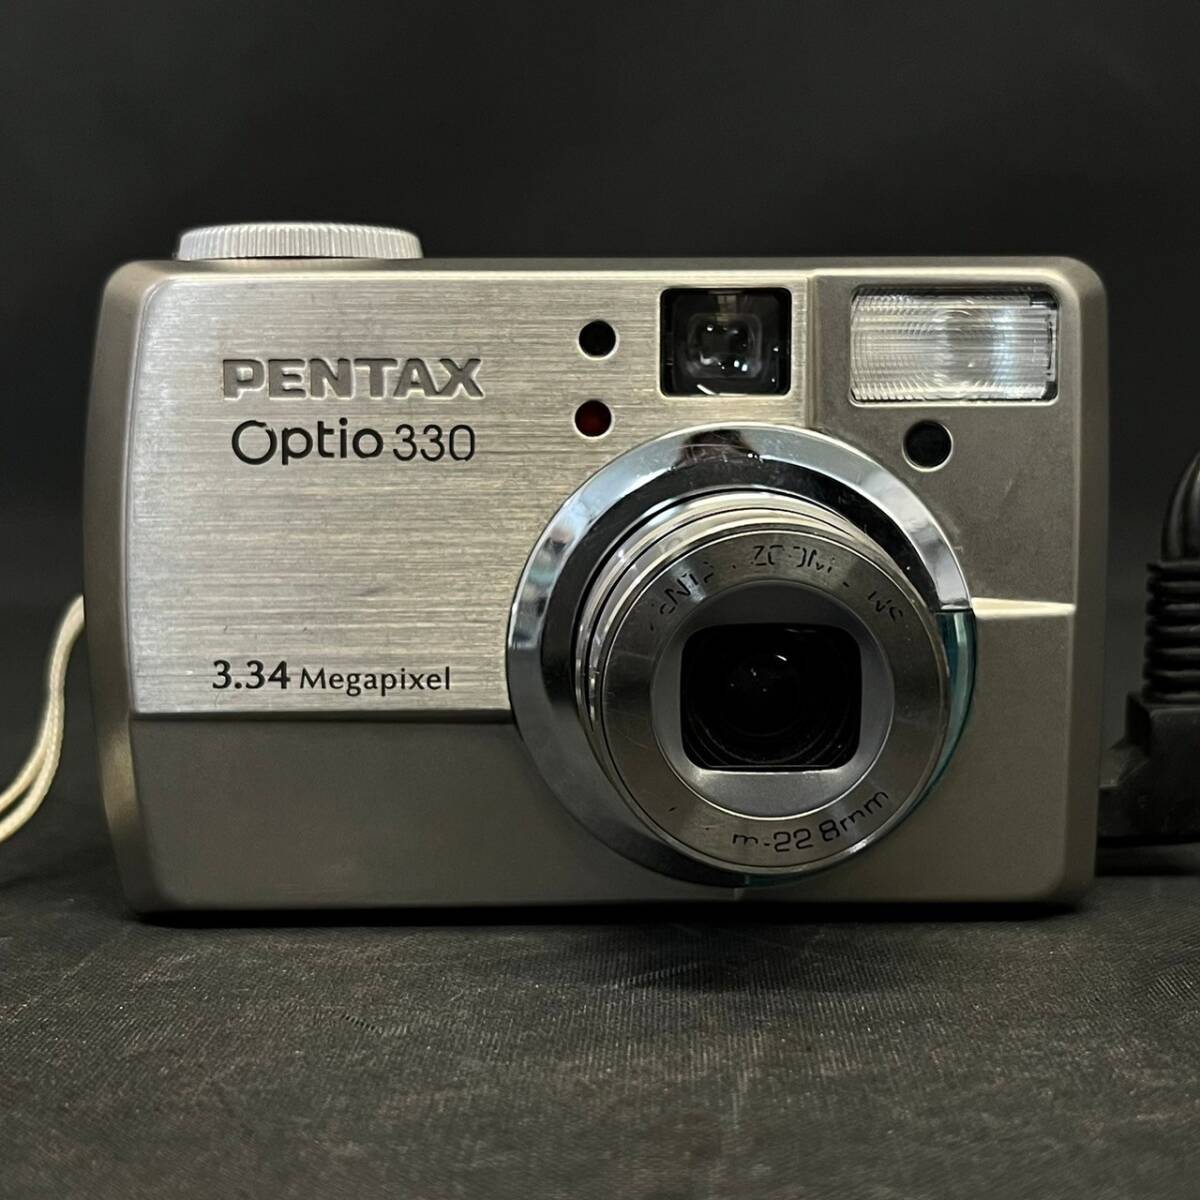 BDd220I 60 PENTAX Optio330 オプティオ 3.34 Megapixel 説明書付 デジタルカメラ の画像2